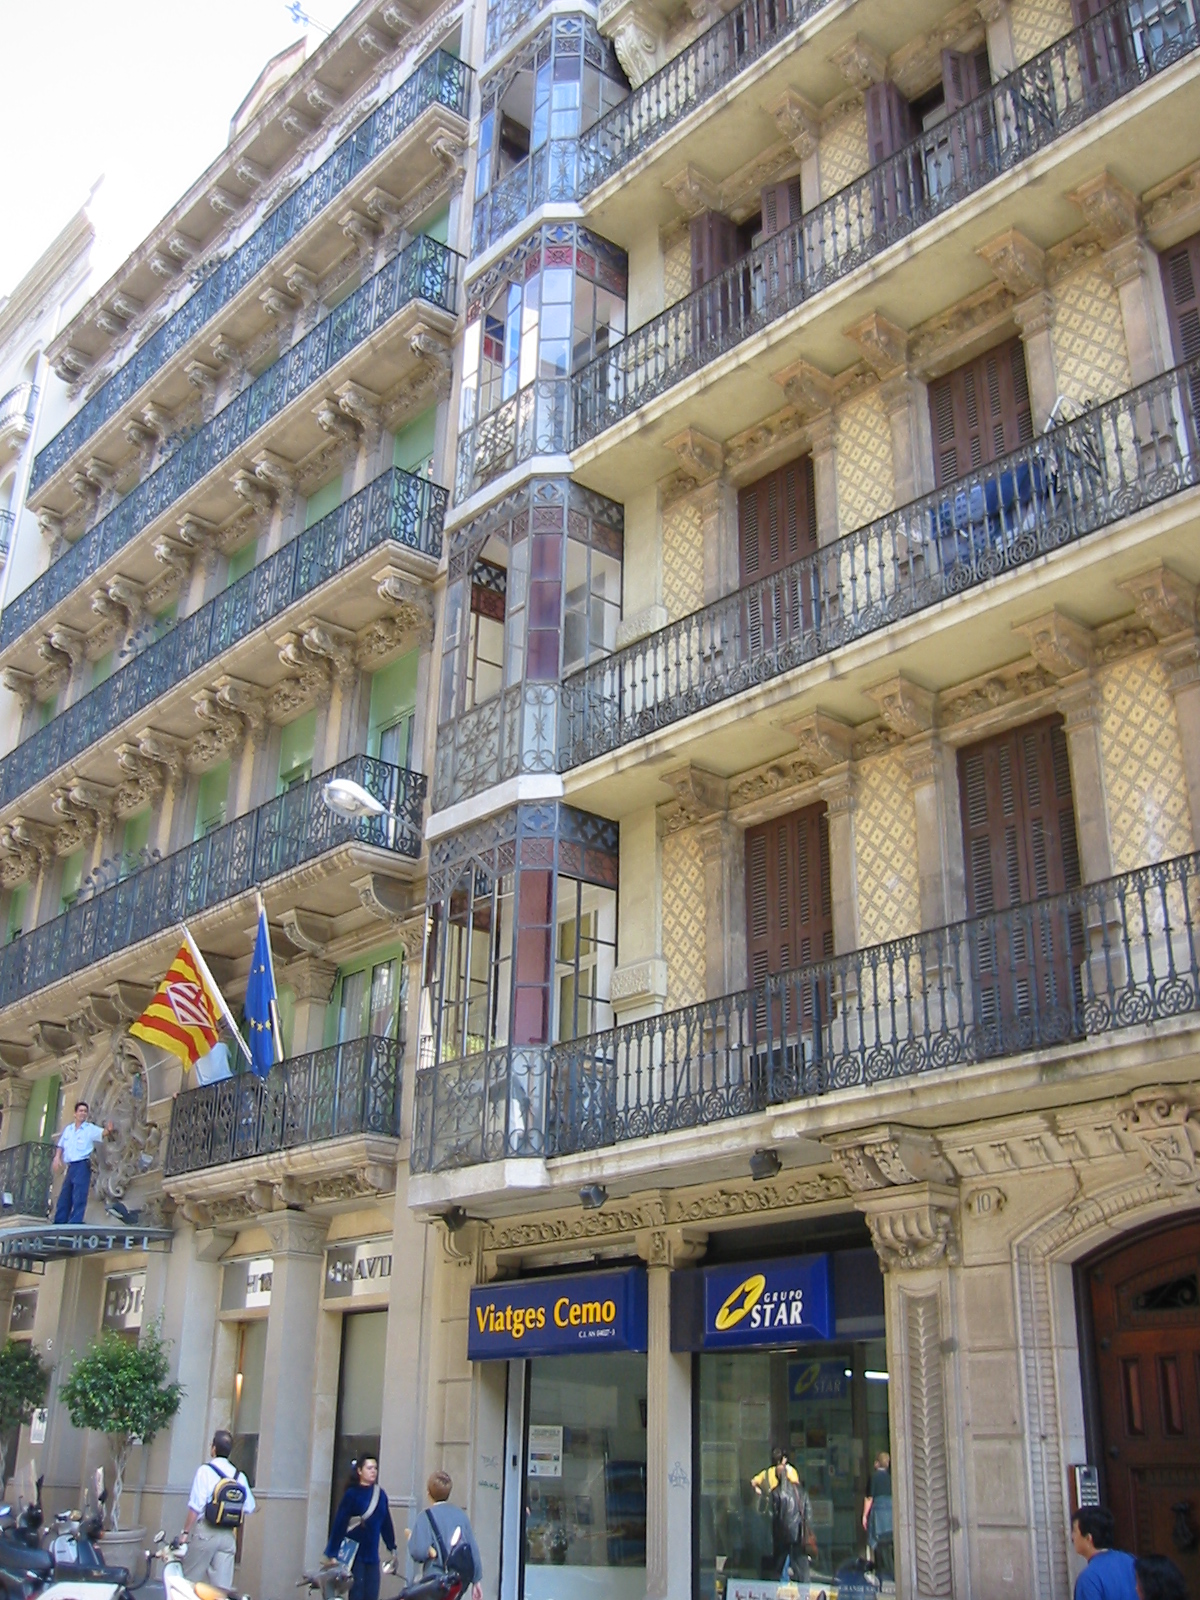 architecture exteriors balcony balconies barca barcelona hotel